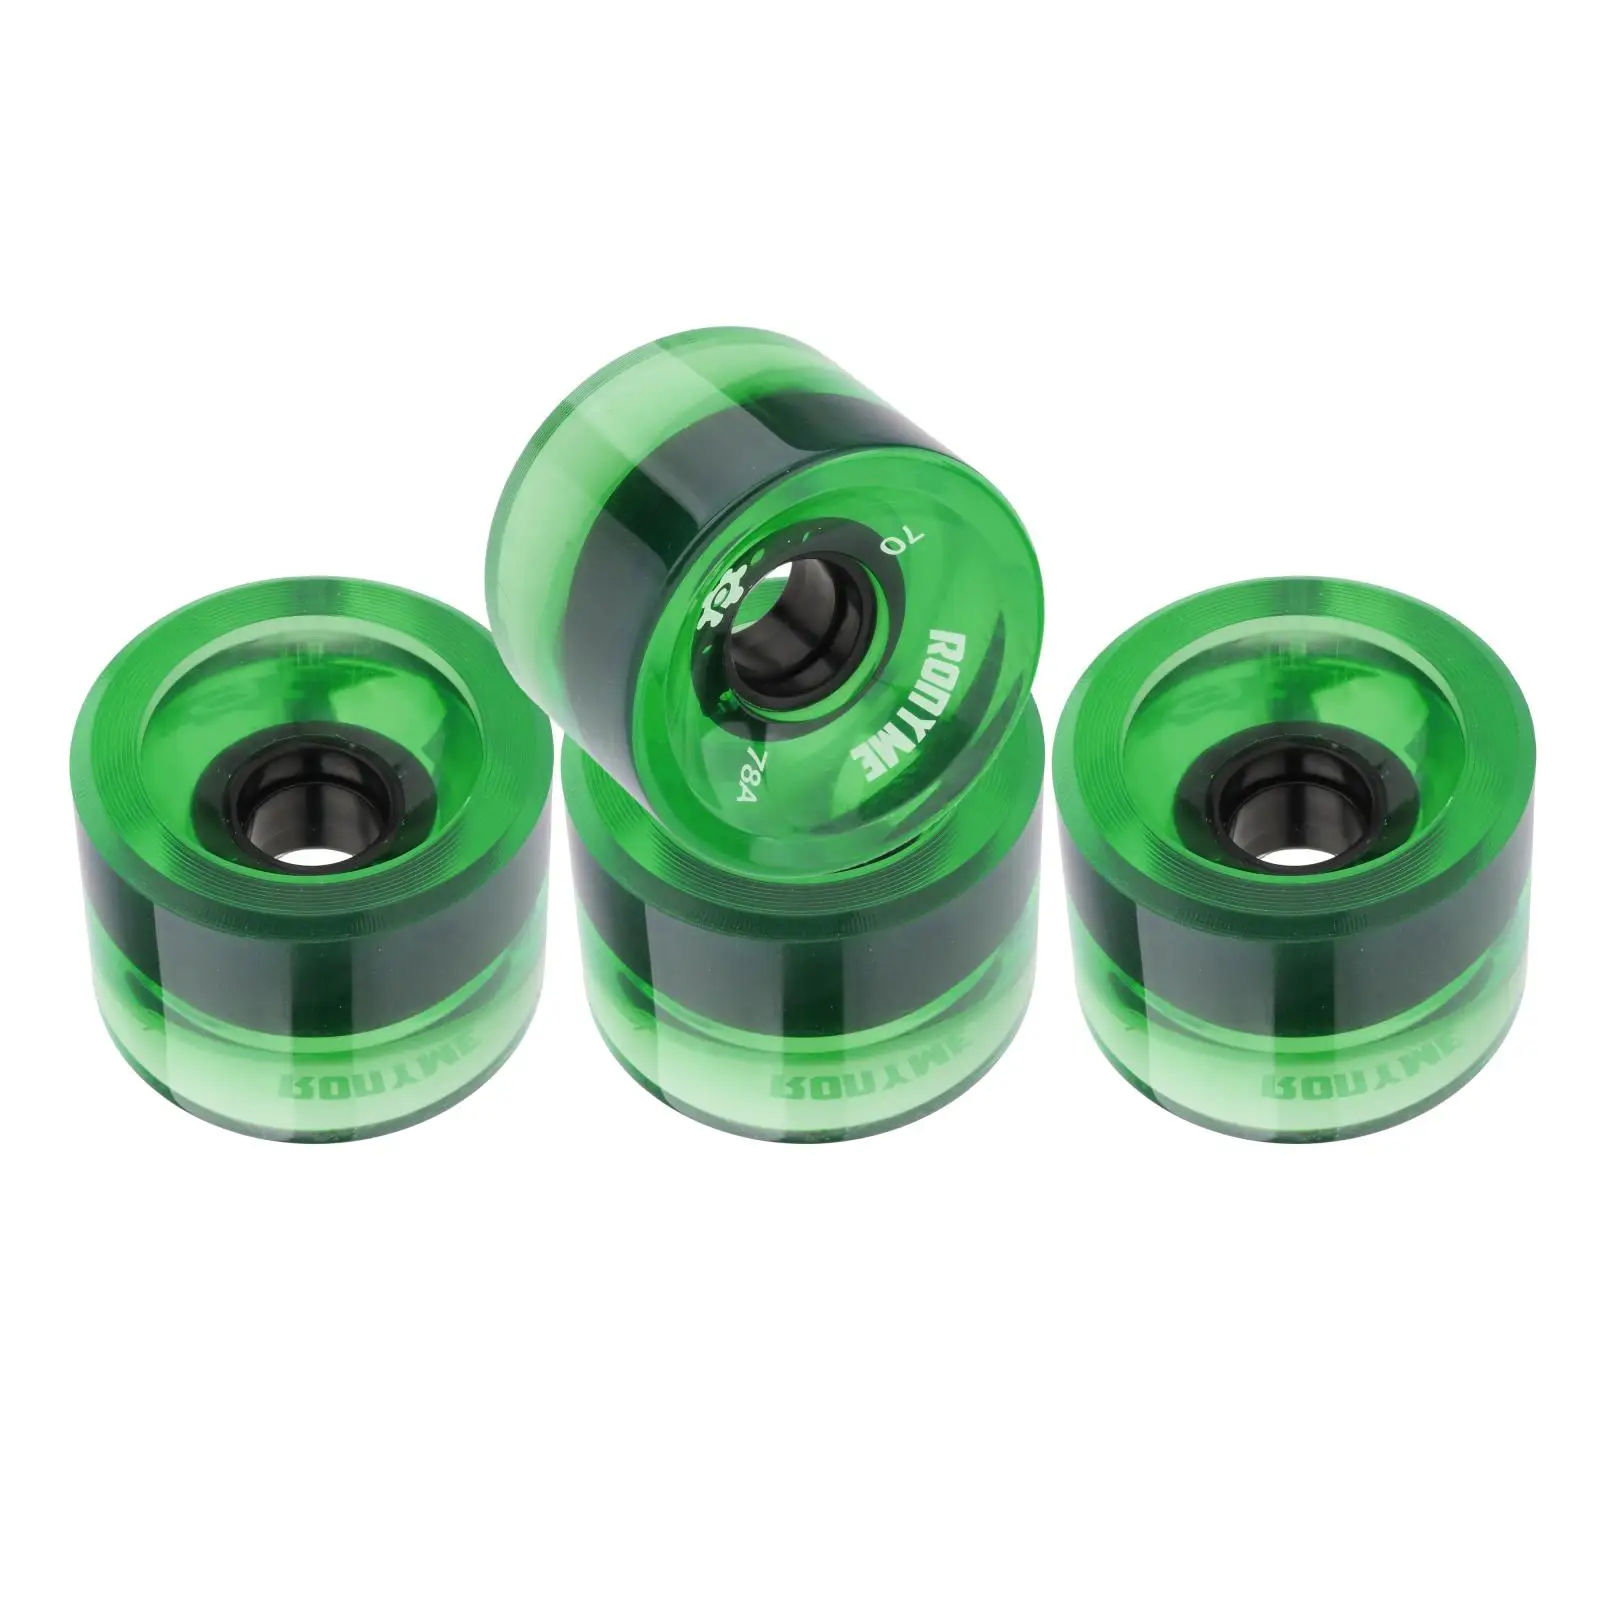 4 Pieces Skateboard Wheels PU Roller Cruiser Maintenance Parts Accessories